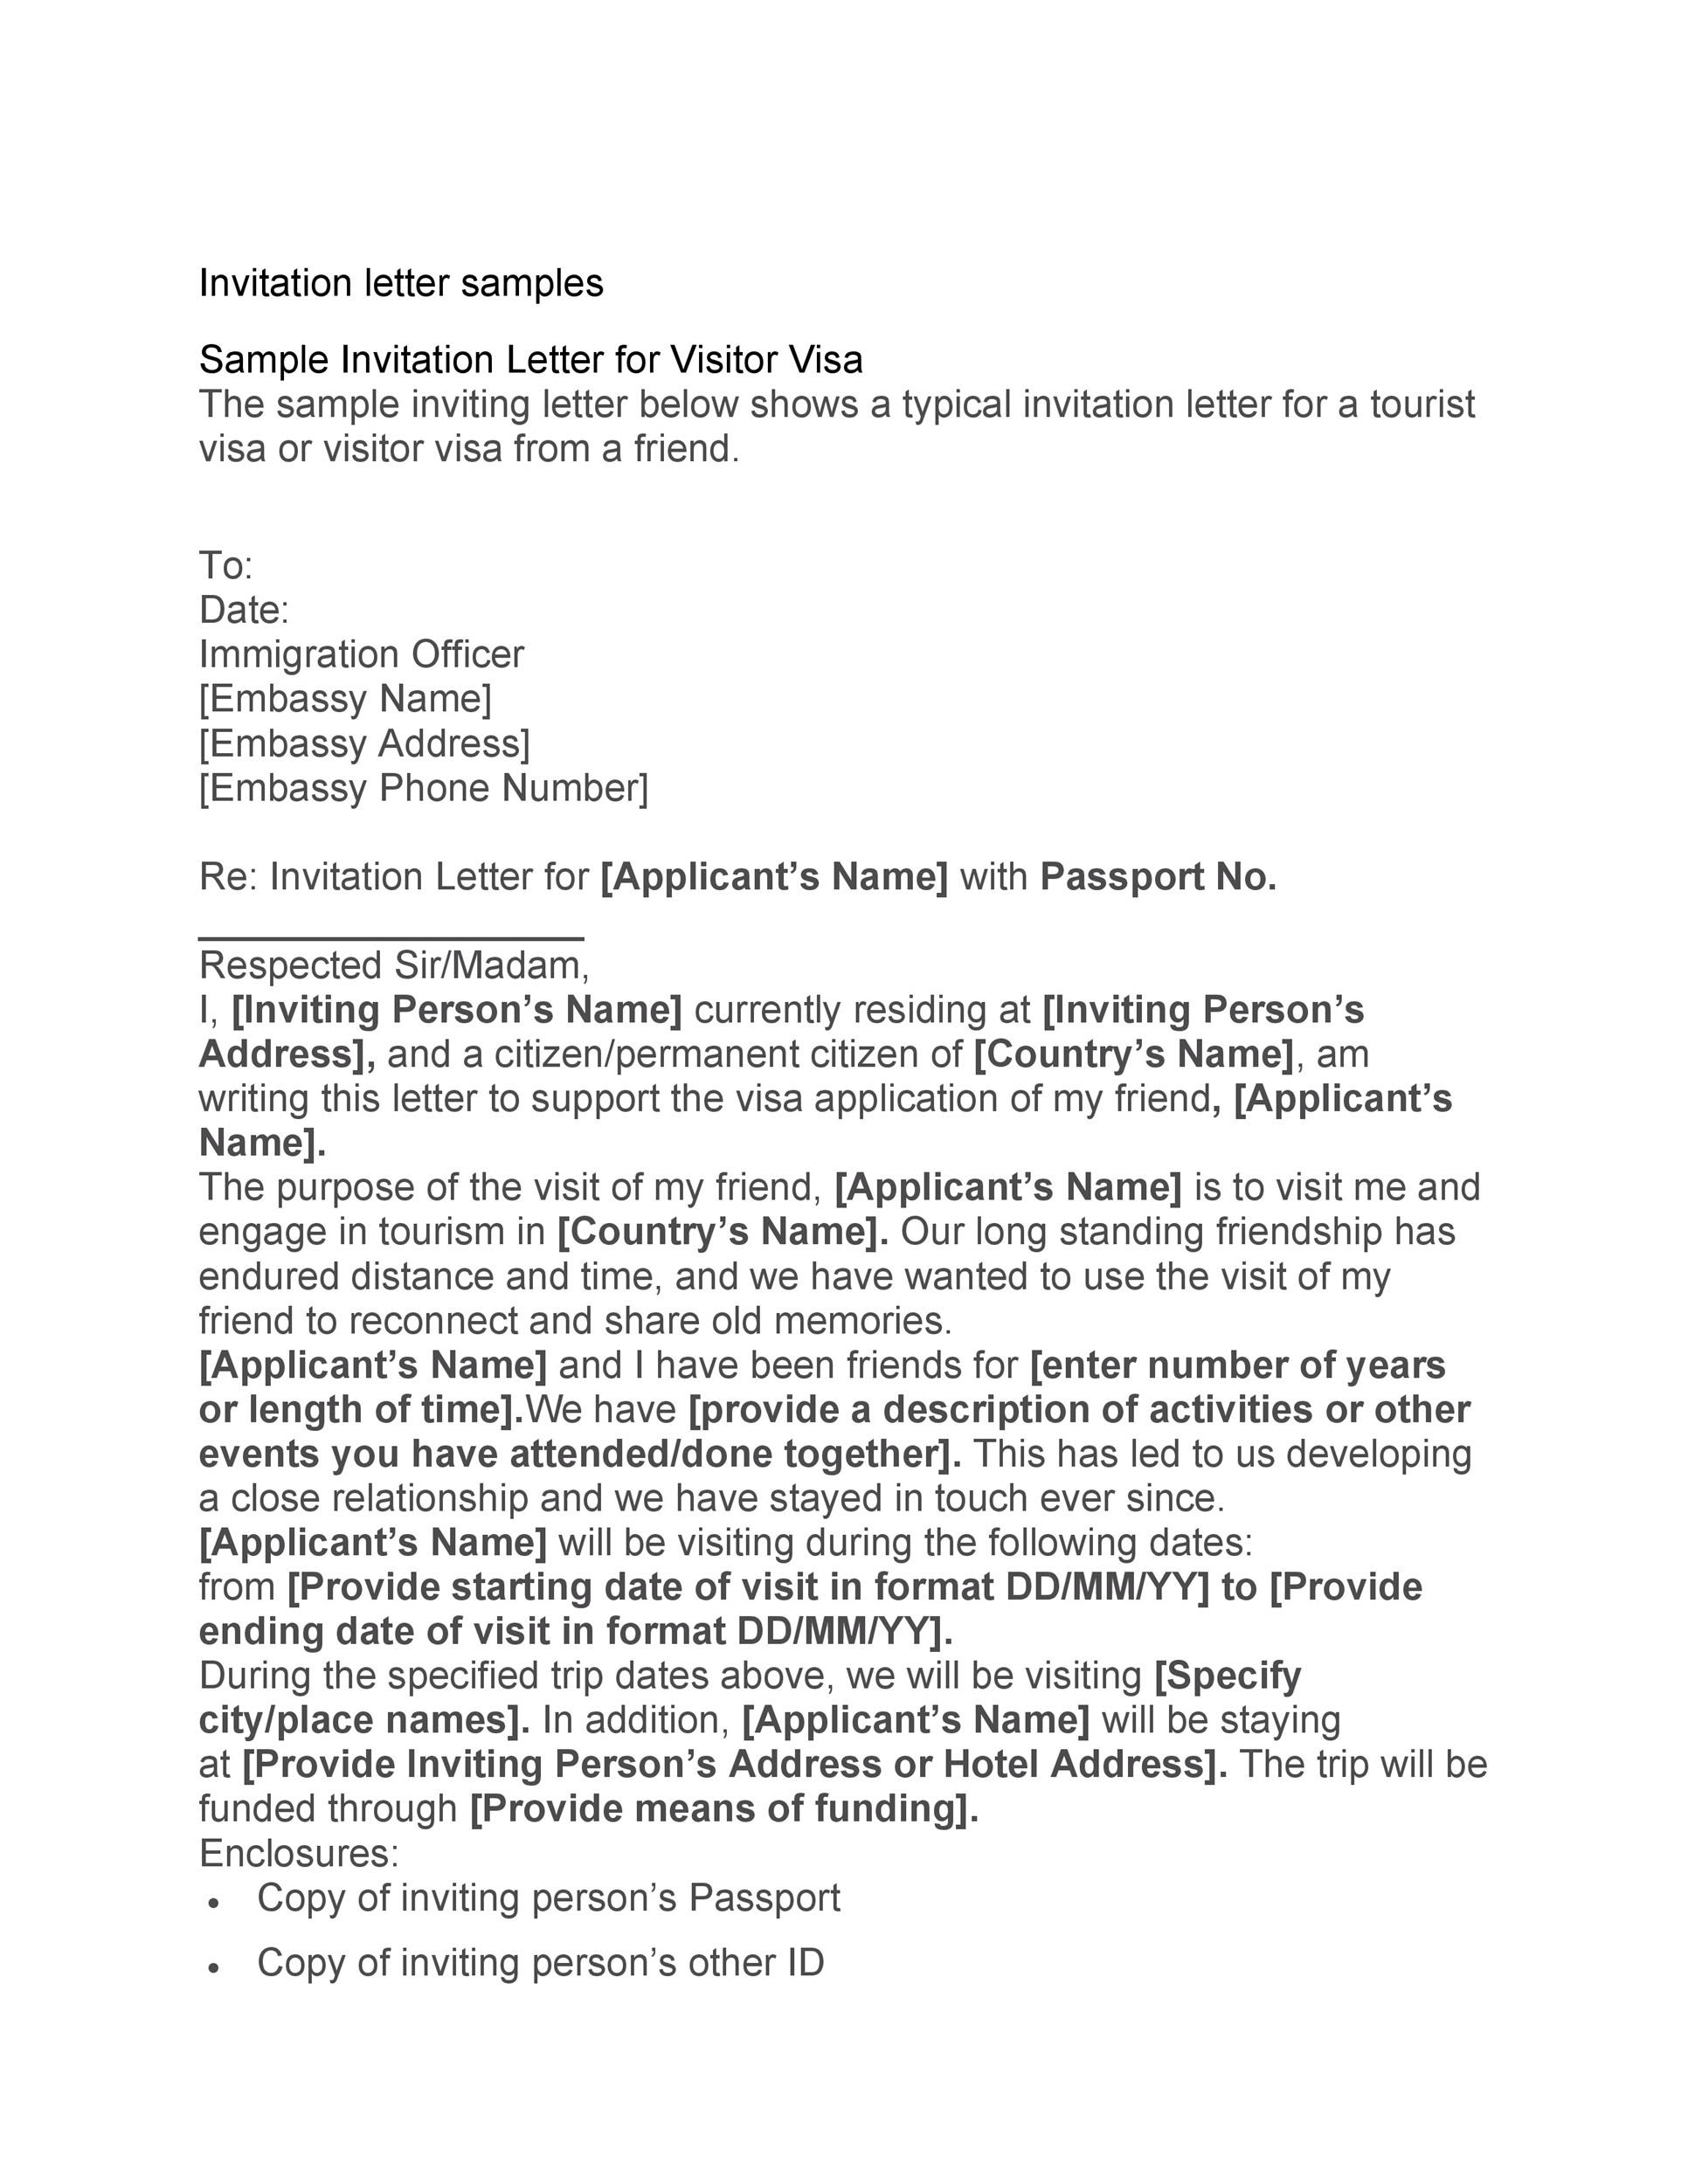 Sample Of Invitation Letter For Visitor Visa Pregnancy | The Document